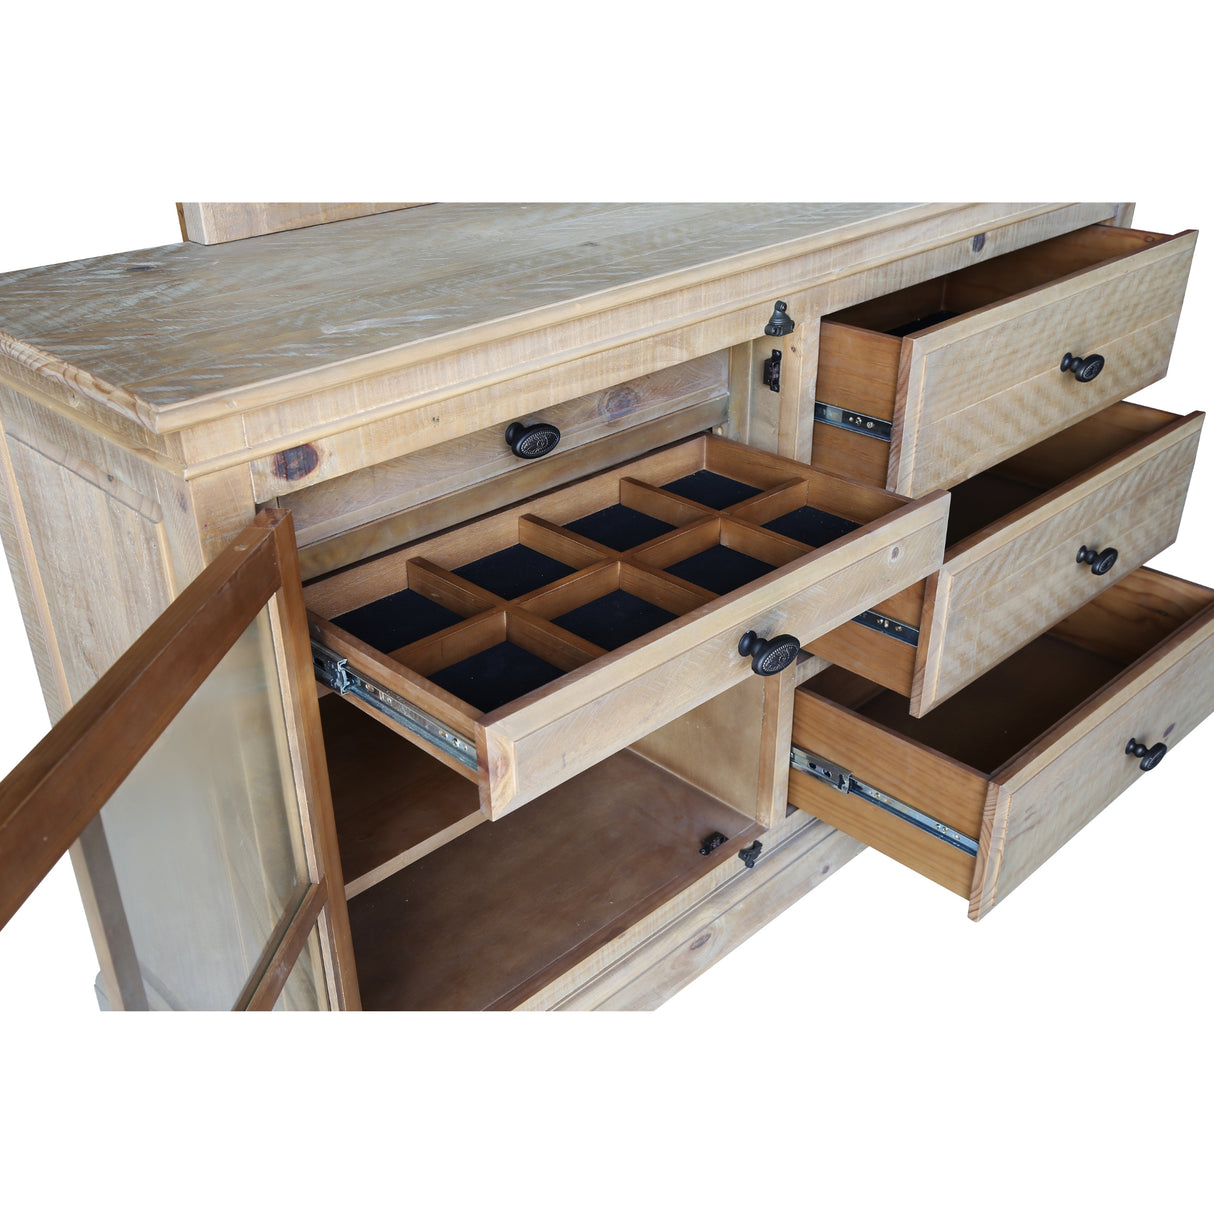 Jade Dresser 5 Chest of Drawers 1 Door Bed Storage Cabinet - Natural